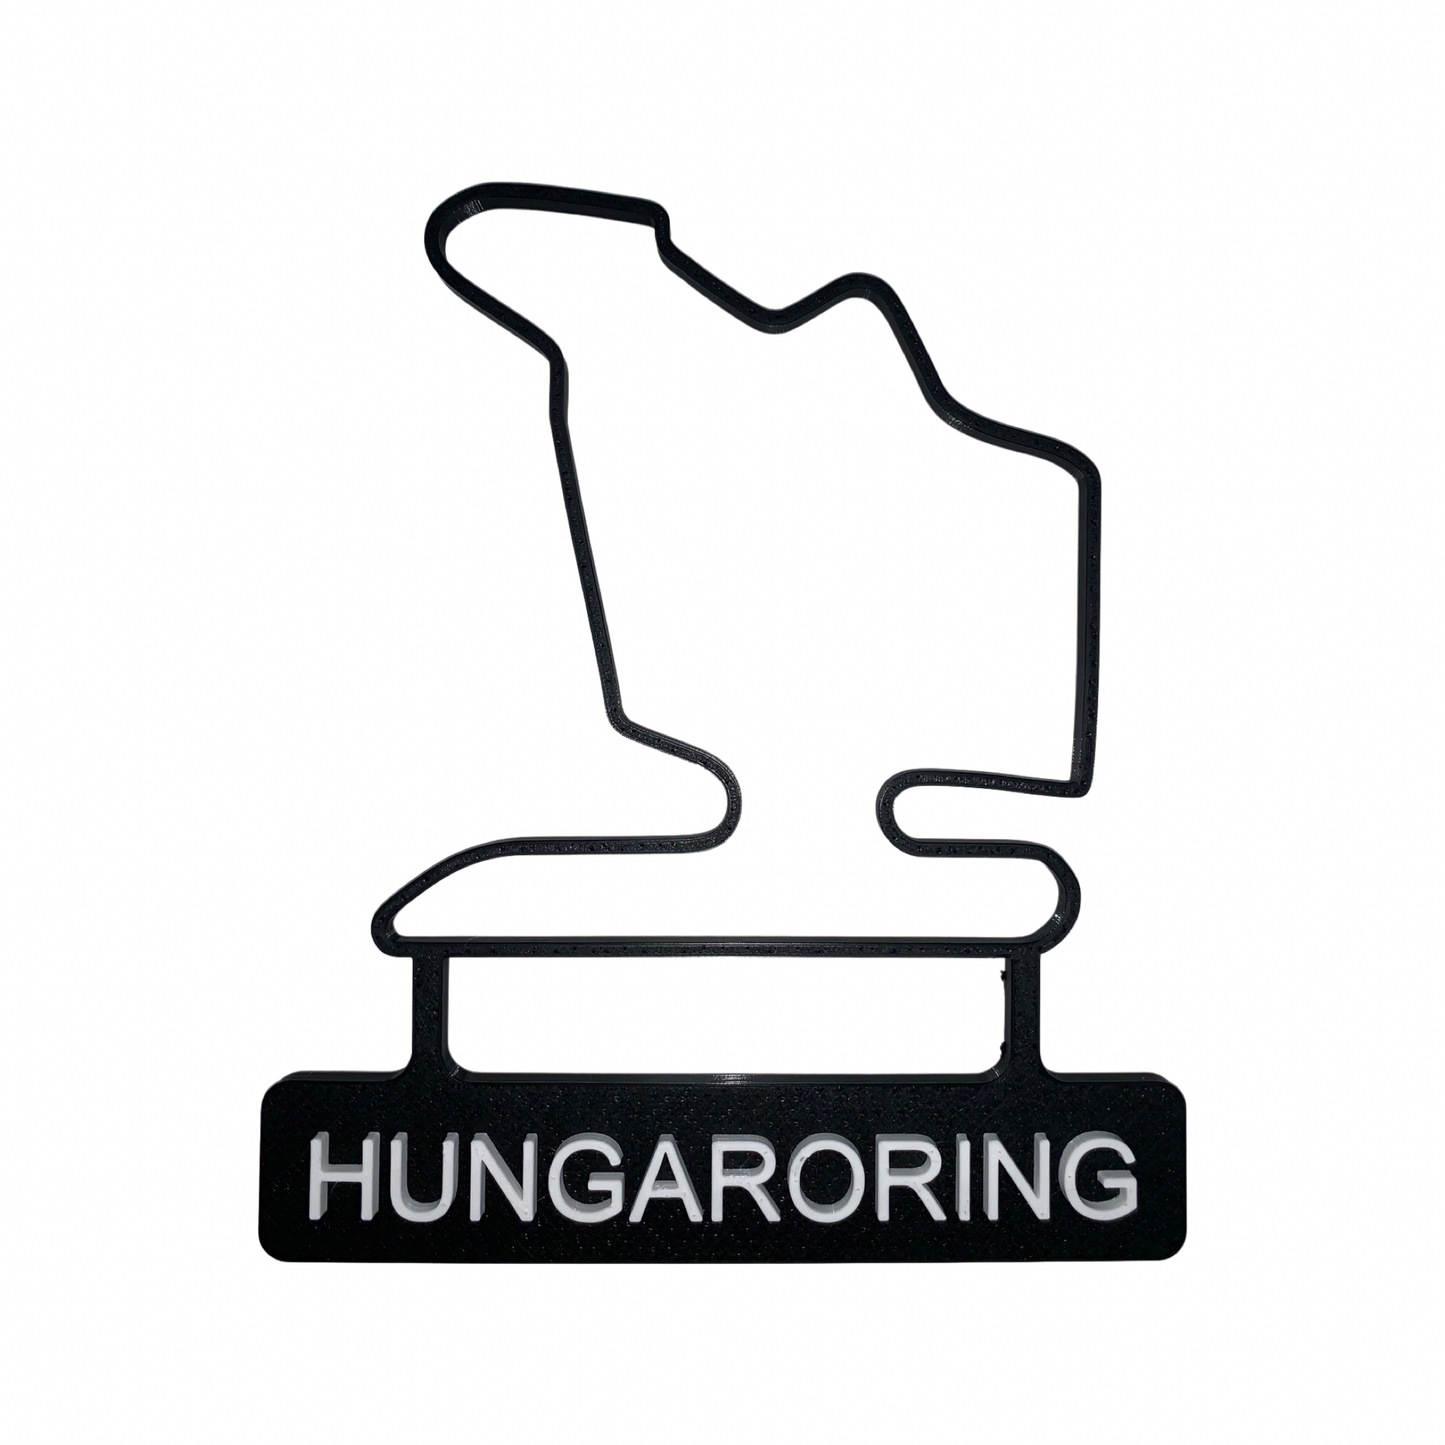 3D printed F1 tracks 2021 season - Hungaroring